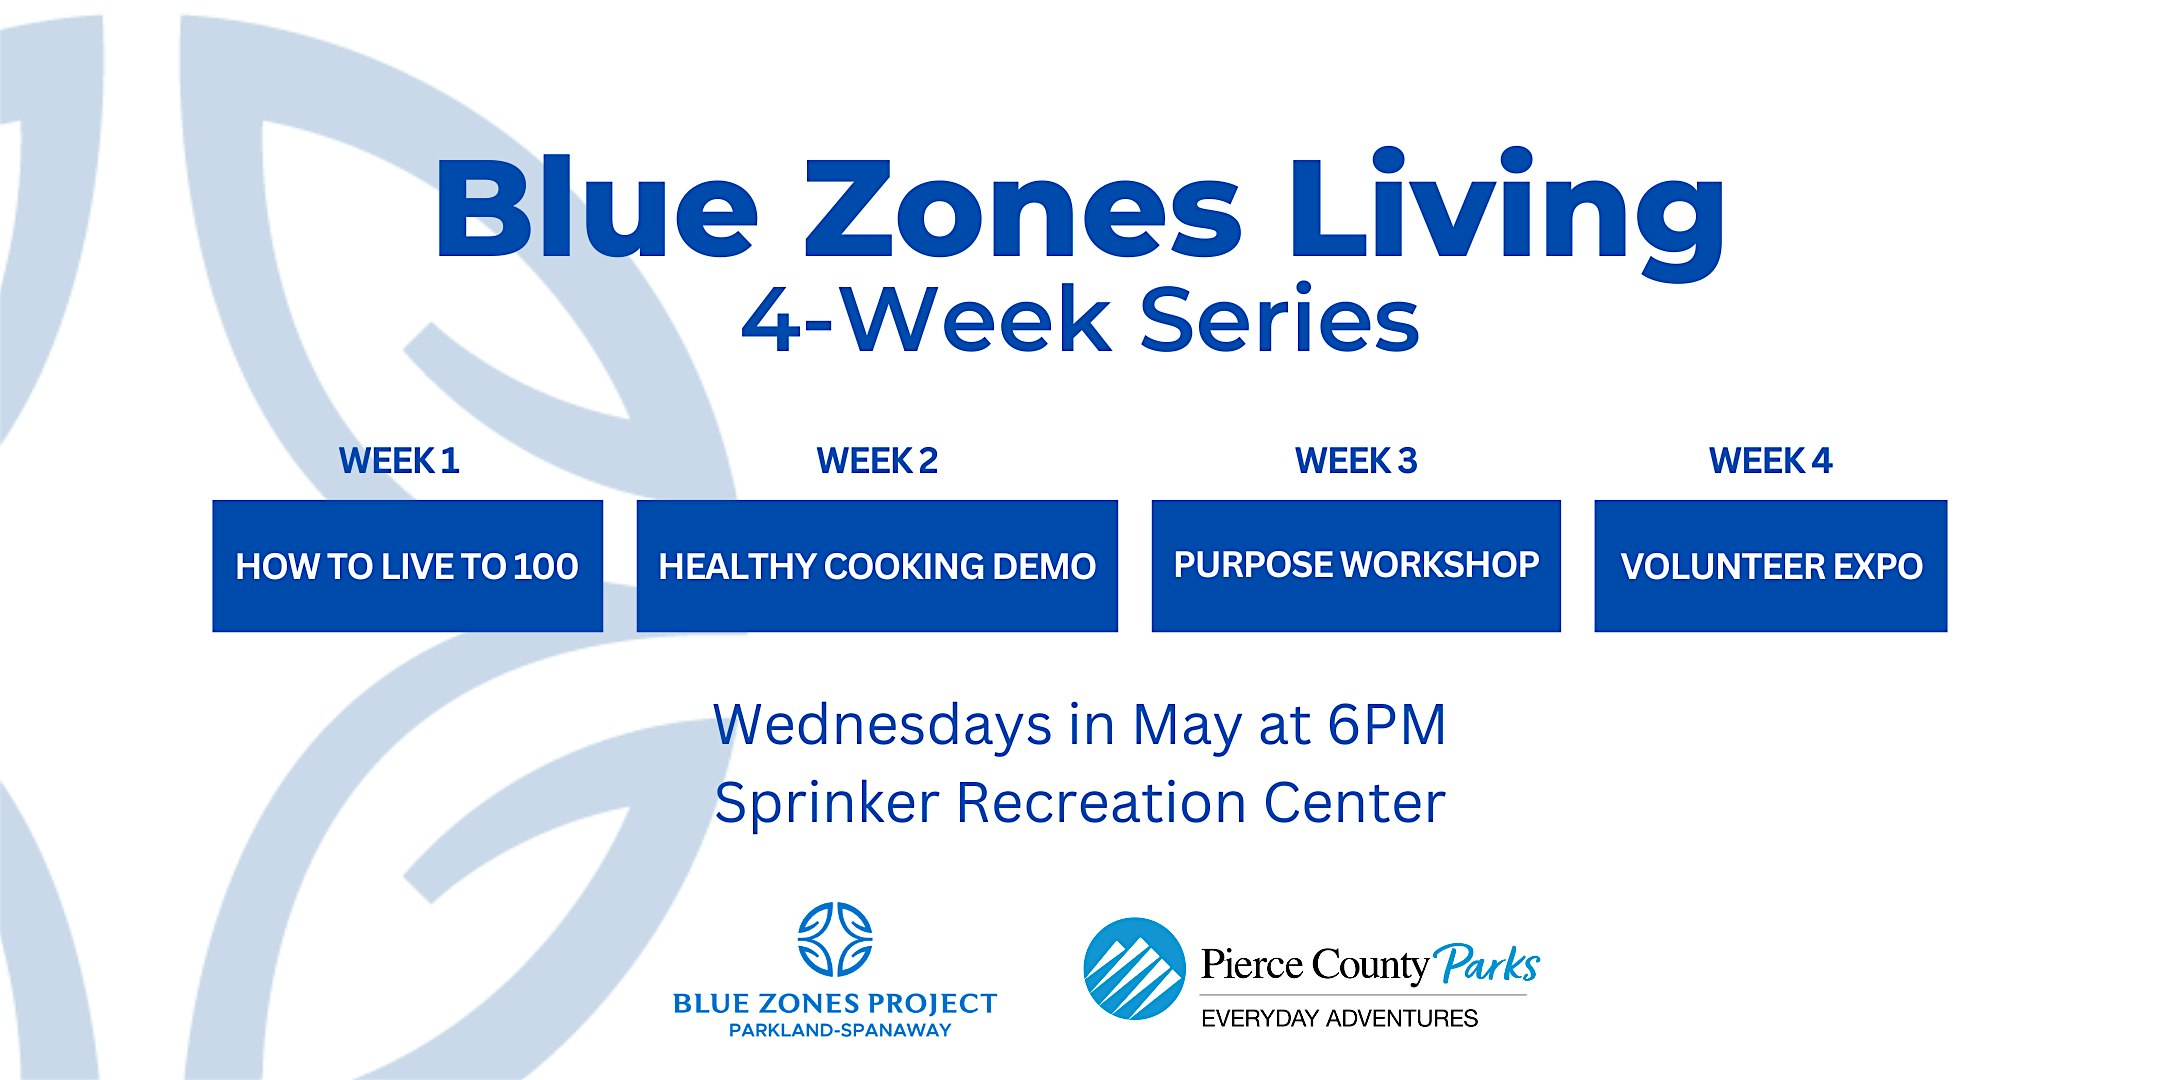 Blue Zones Living 4-Week Series (Wednesdays) at Sprinker Rec. Center